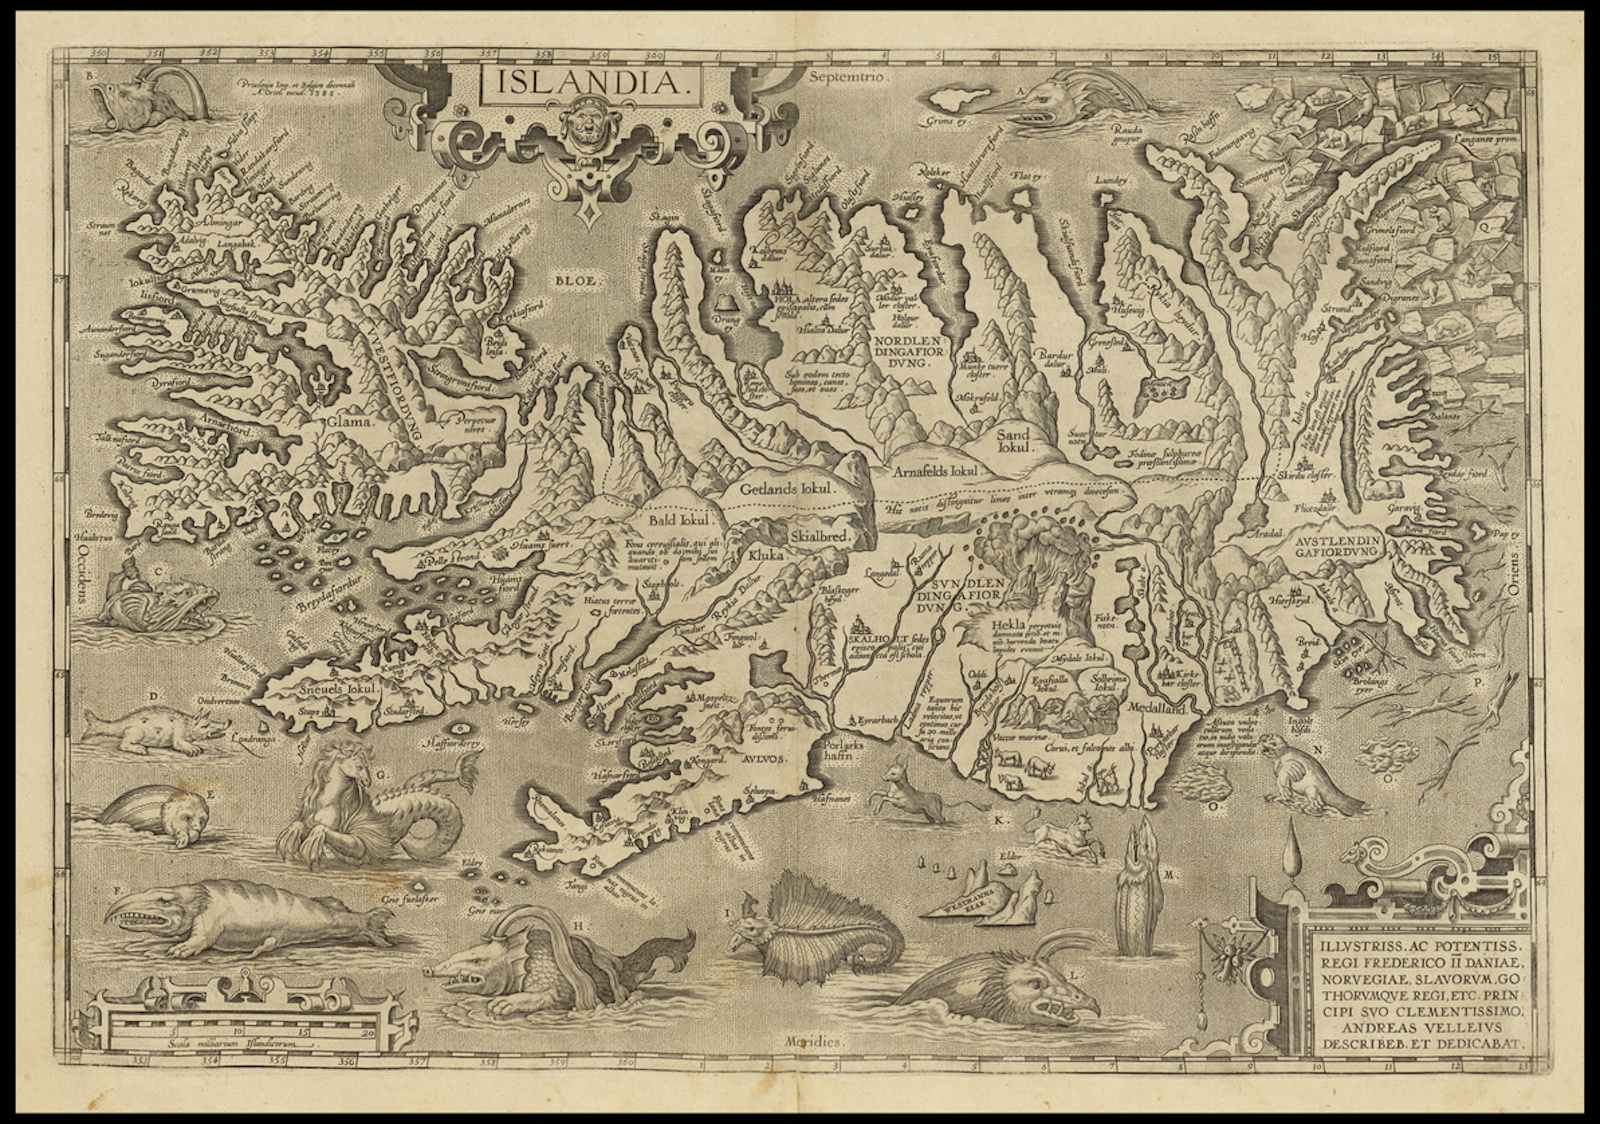 Map of Iceland by Abraham Ortelius, after Bishop Gudbrandur Þorláksson, Theatrum orbis terrarium, c.1590. National Library of Israel. Public Domain.